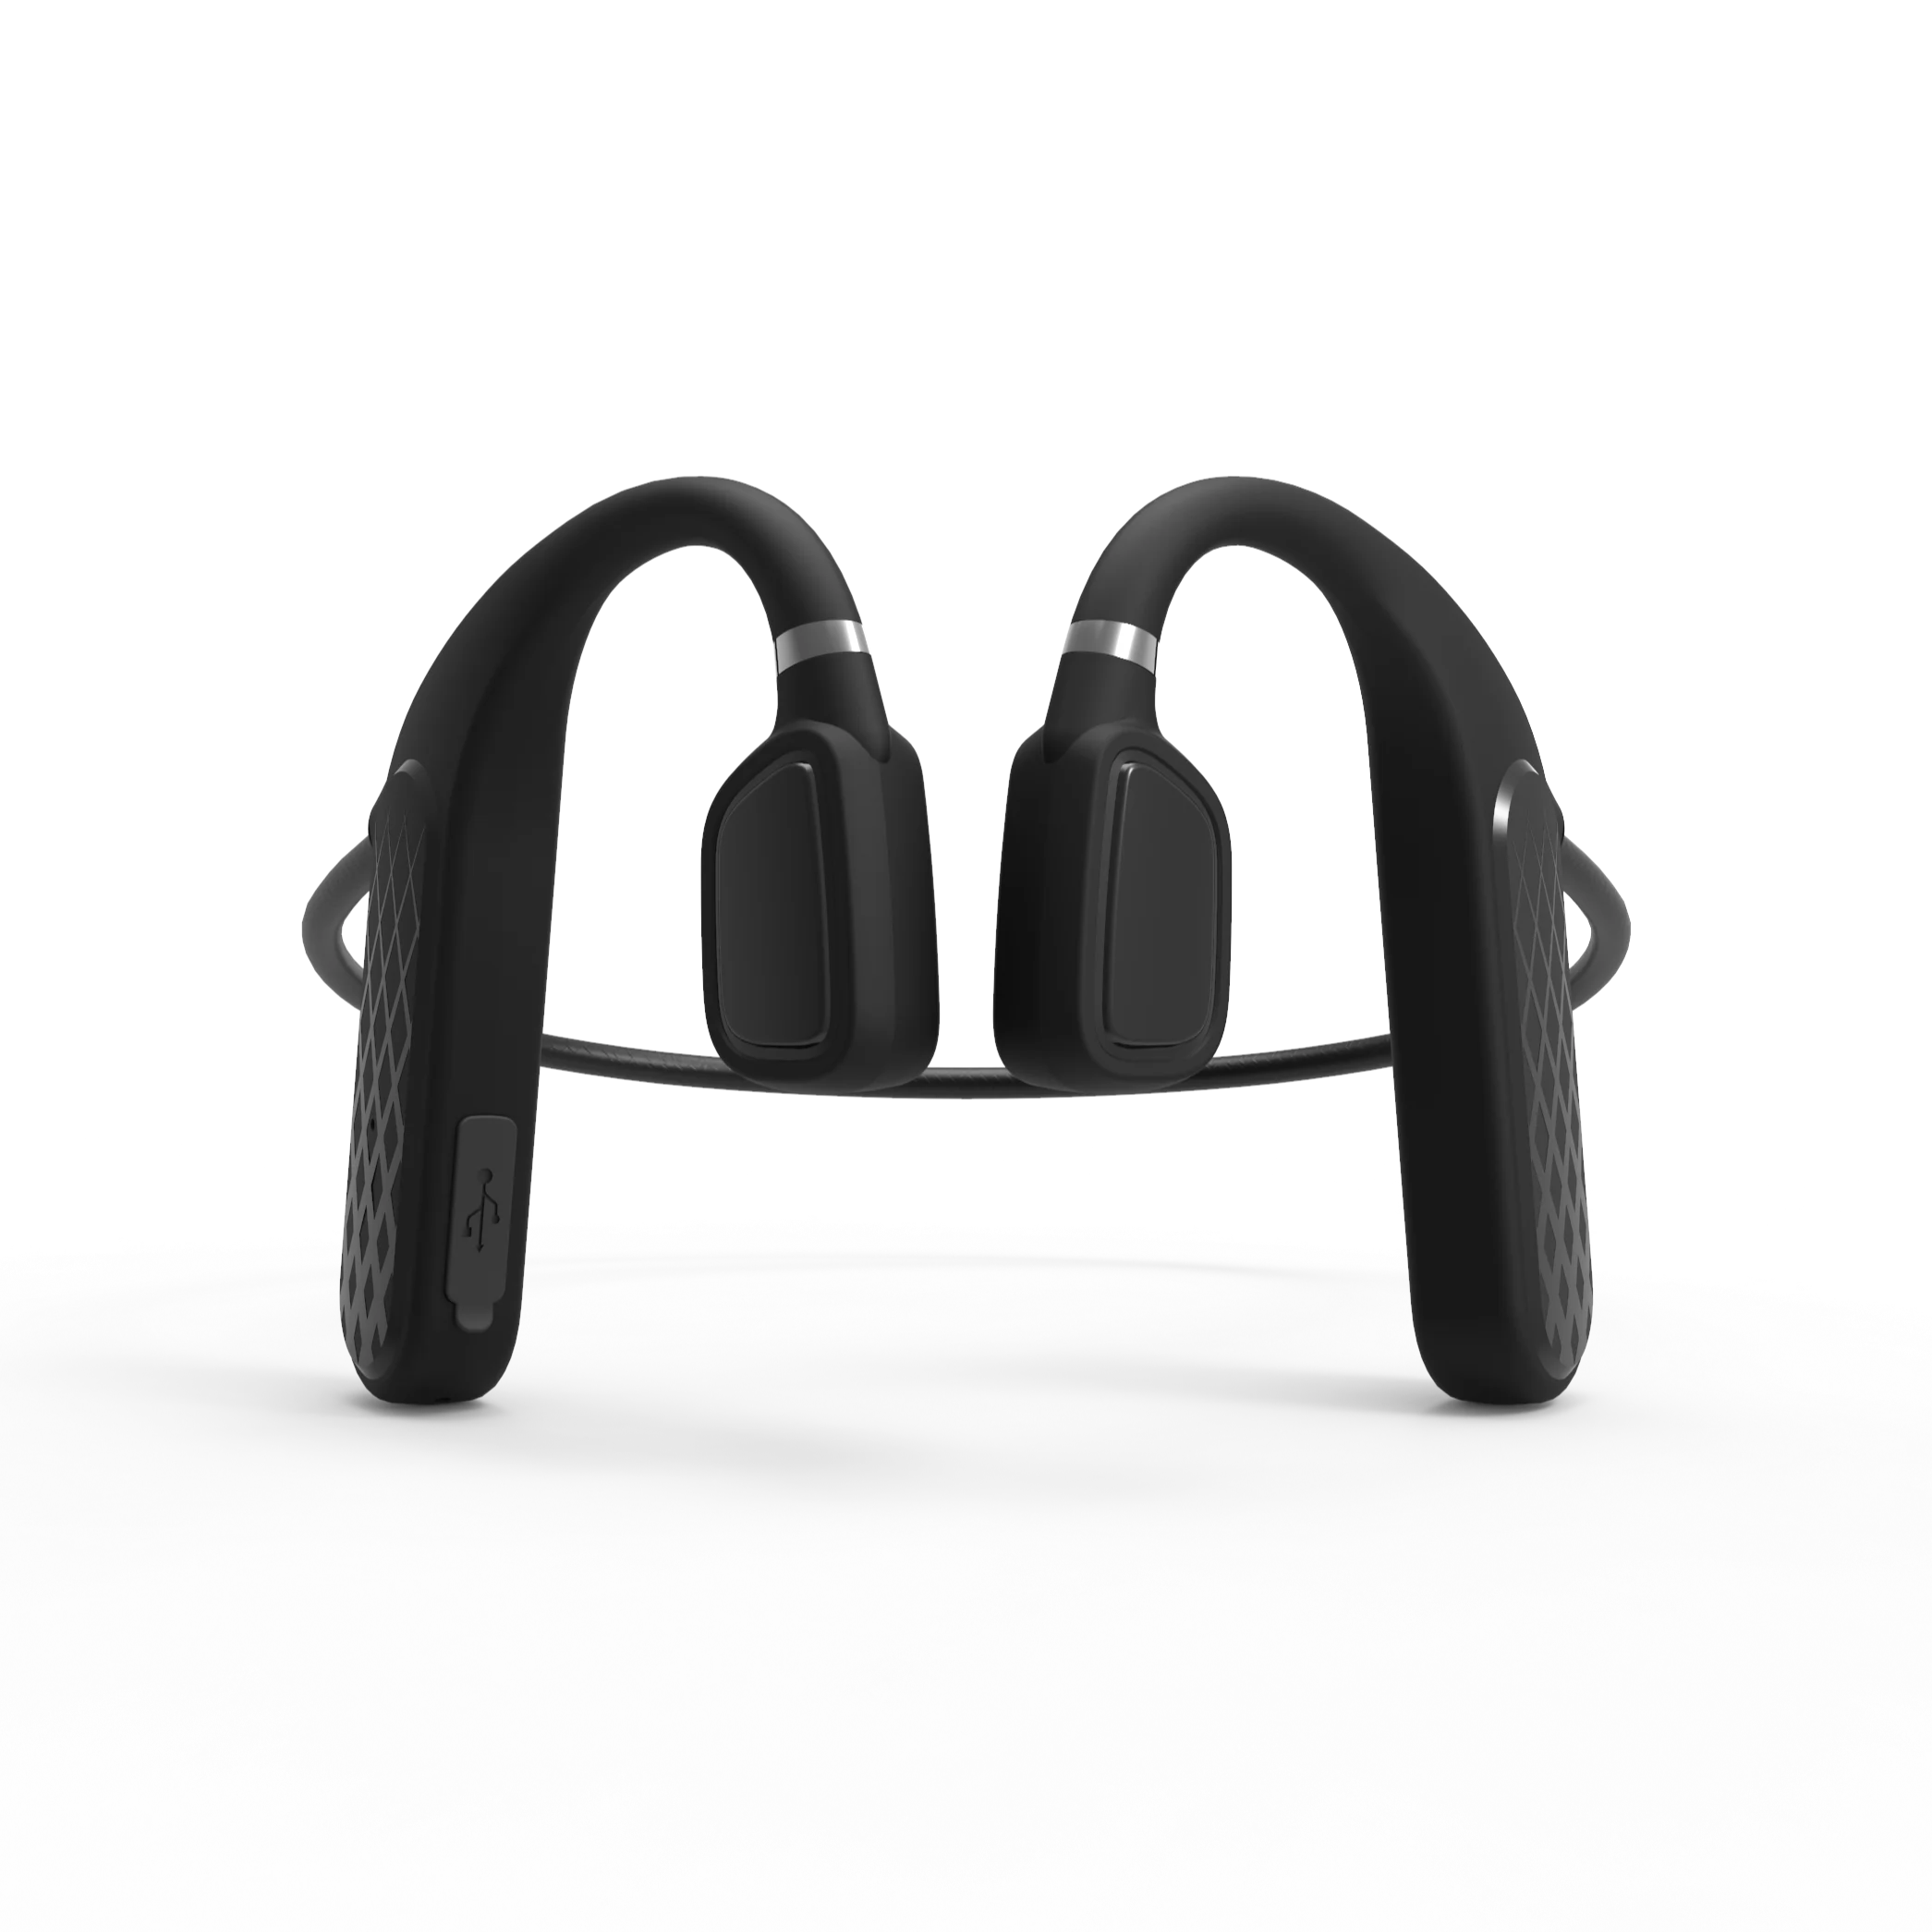 

MD04 Wireless Stereo Headset Bone Conduction Headphone BT 5.0 Noise Reduction Sport Music Earbuds Waterproof Earphones